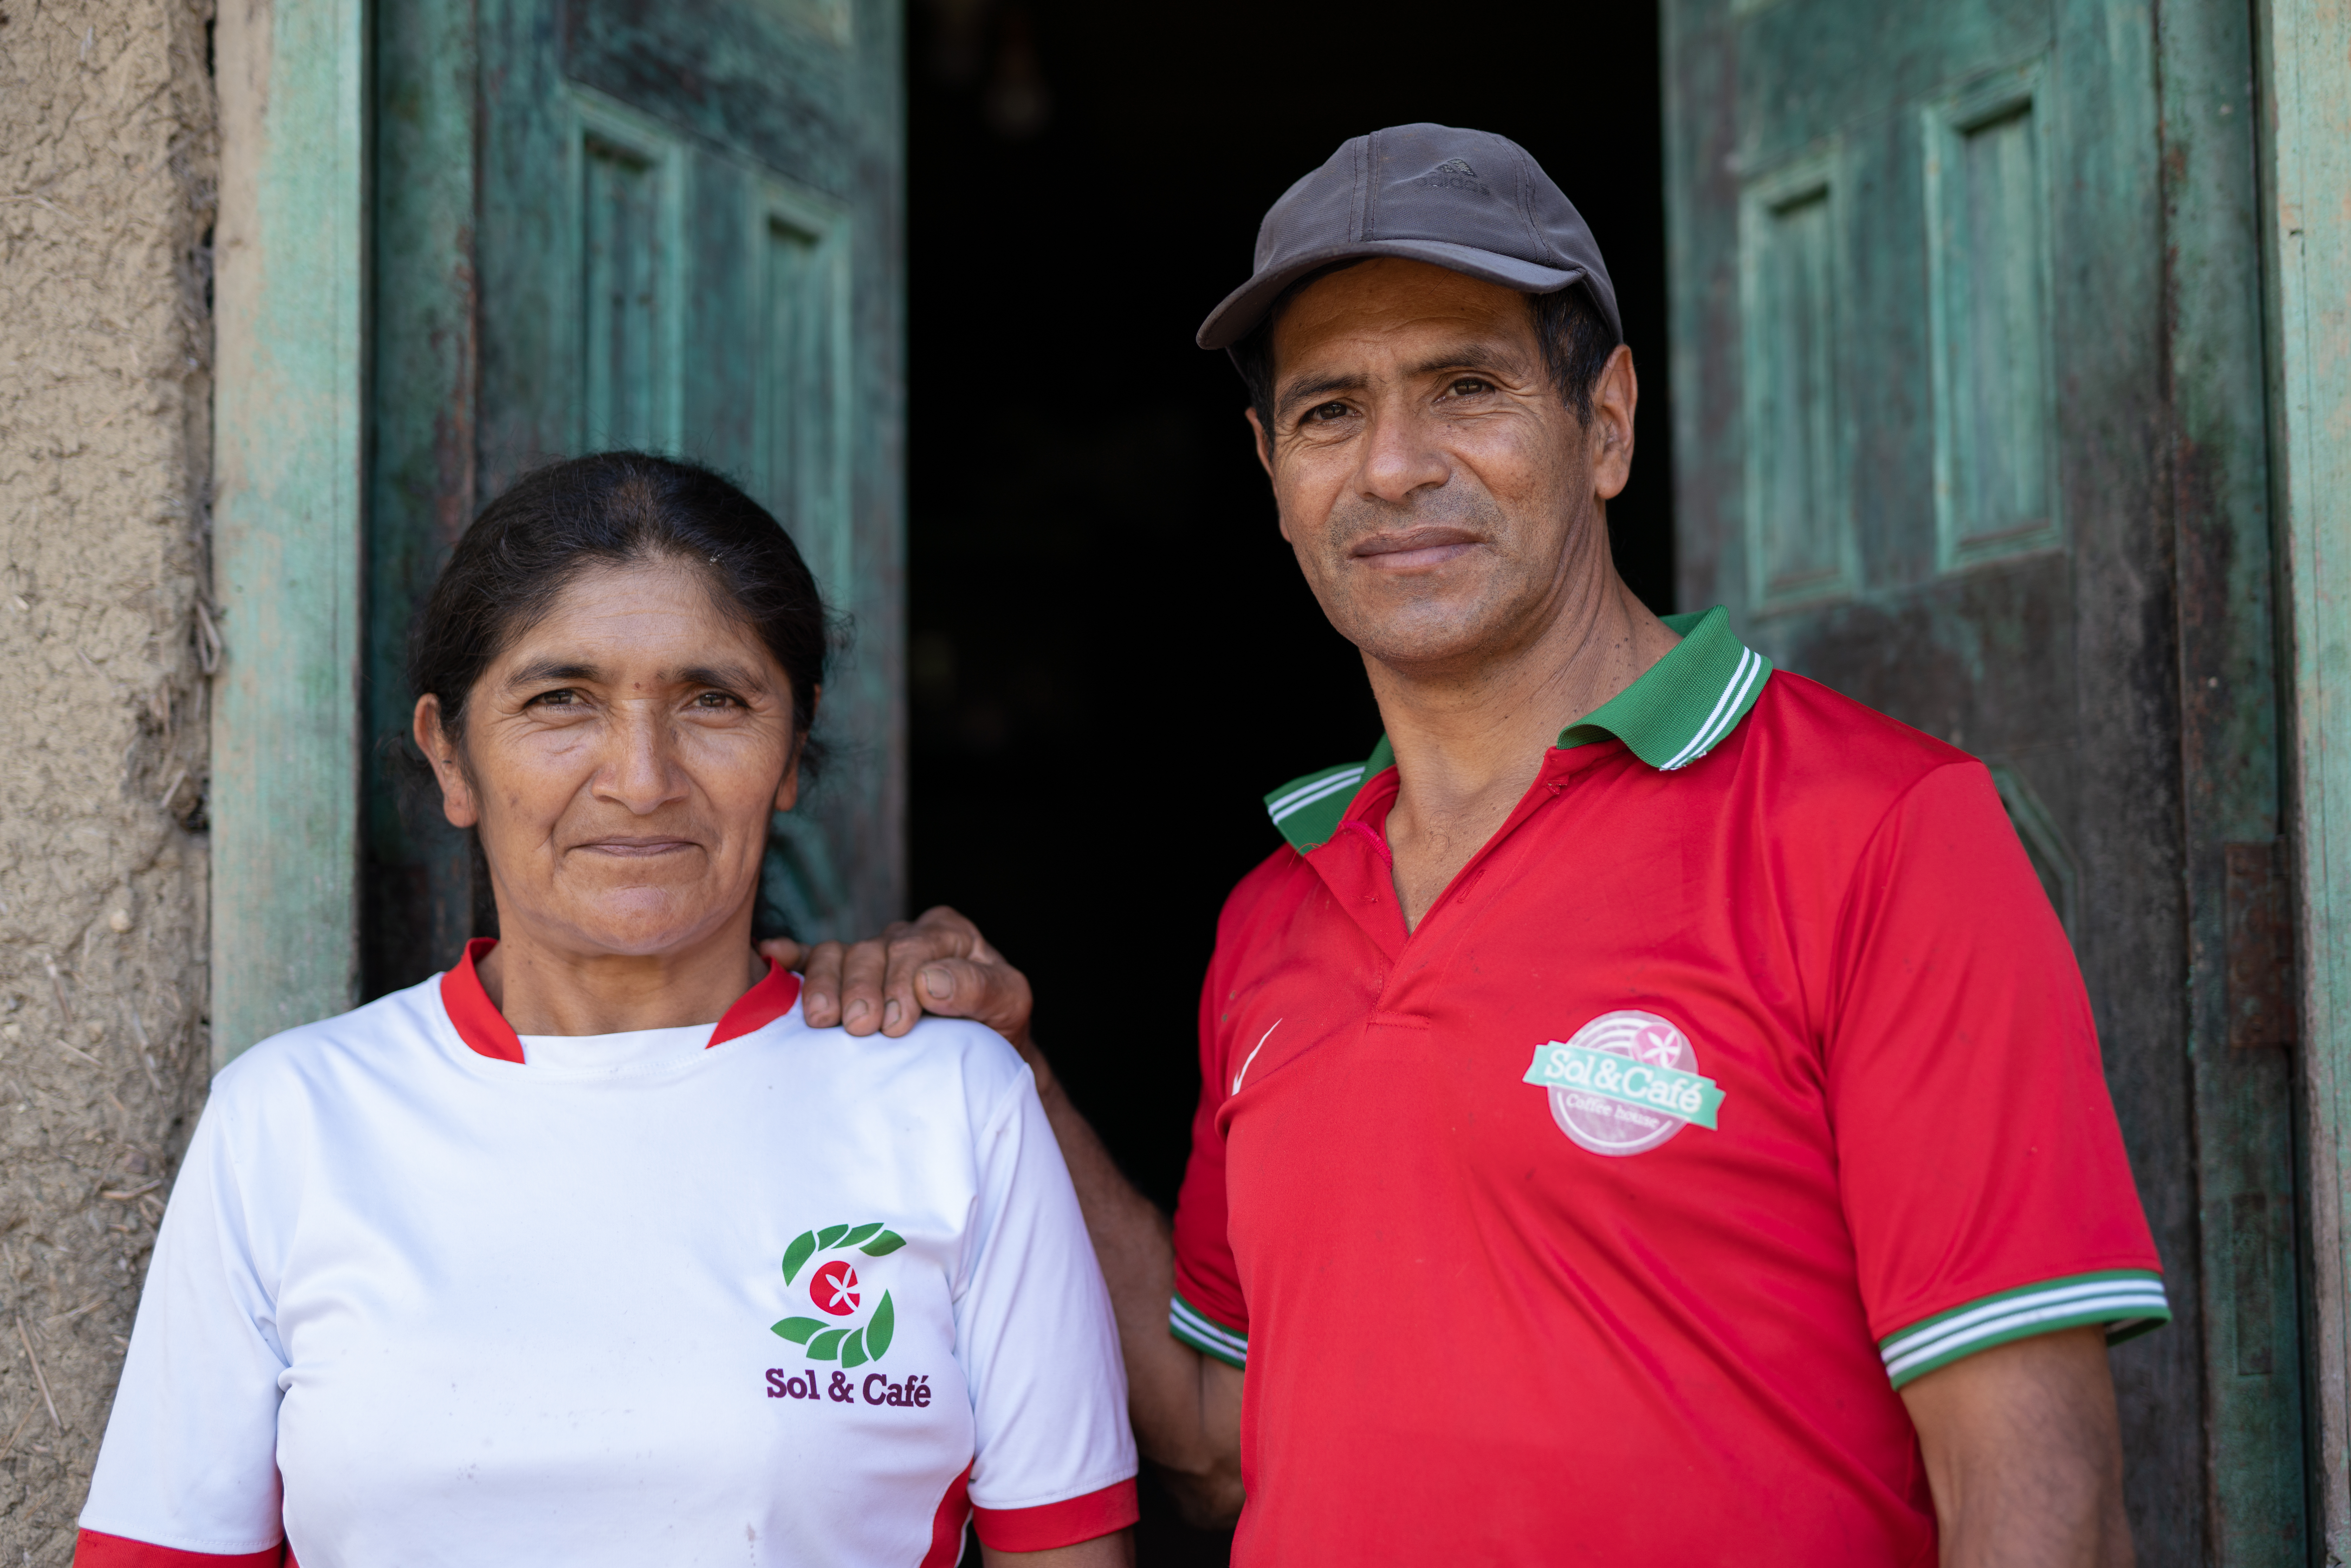 Sol&Cafe producer member, Jose Renulfo Perez, in front of his home along with his wife Filomena Bernal, 56. El Nogal, Jaen, Cajamarca, Peru. October 9, 2022. Credit: James Rodriguez